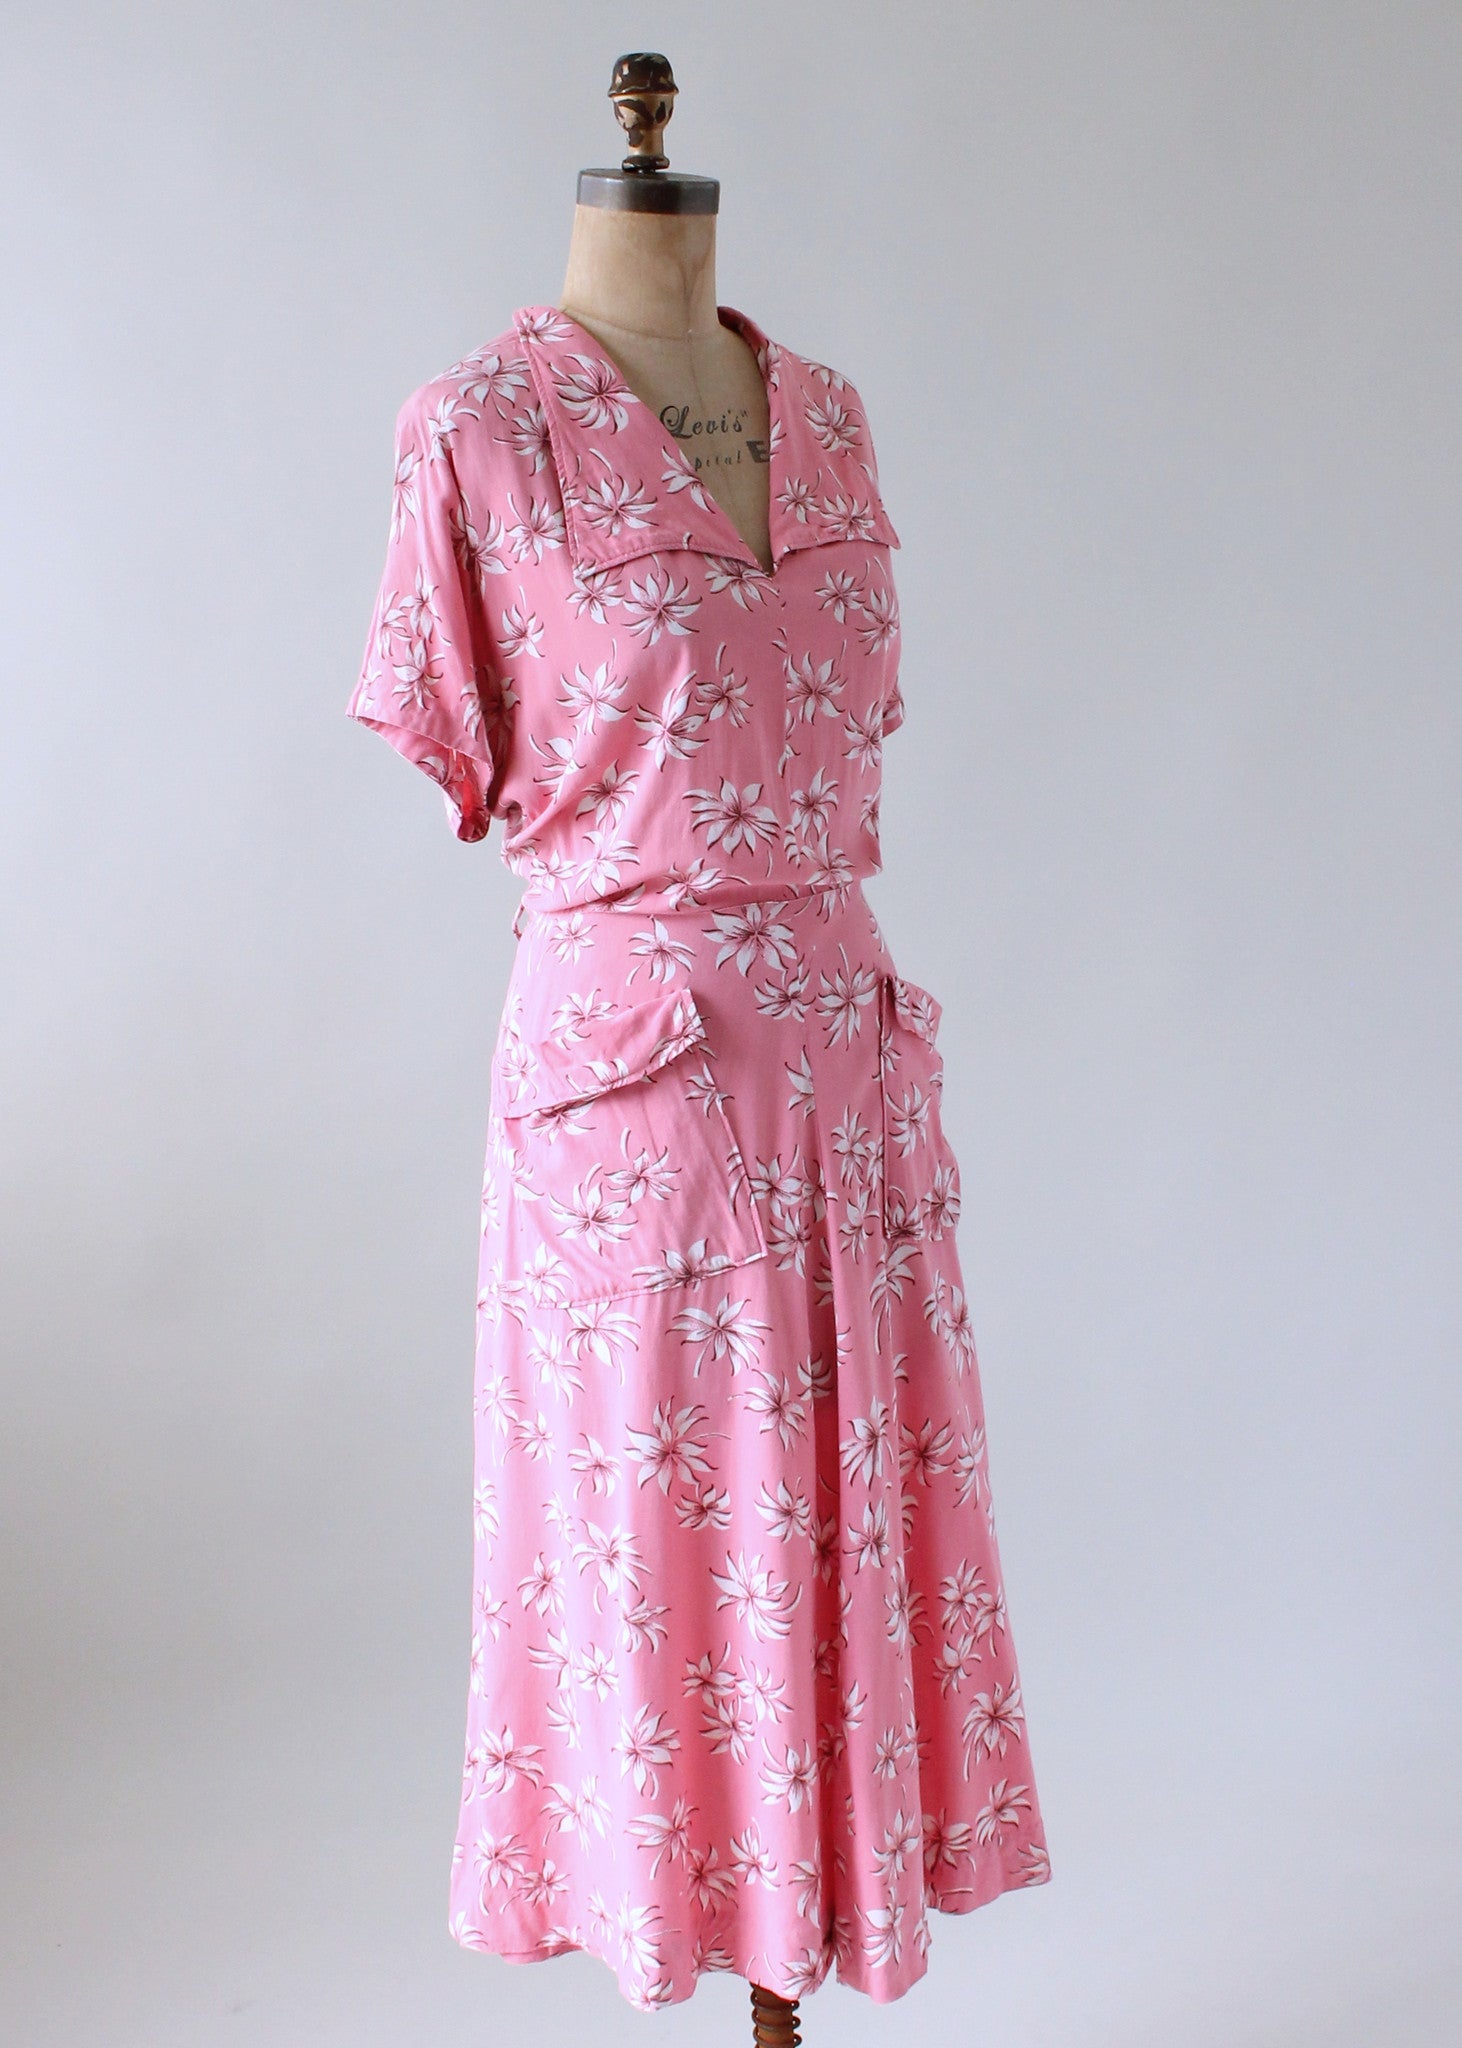 Vintage 1940s Pink Floral Print Day Dress - Raleigh Vintage